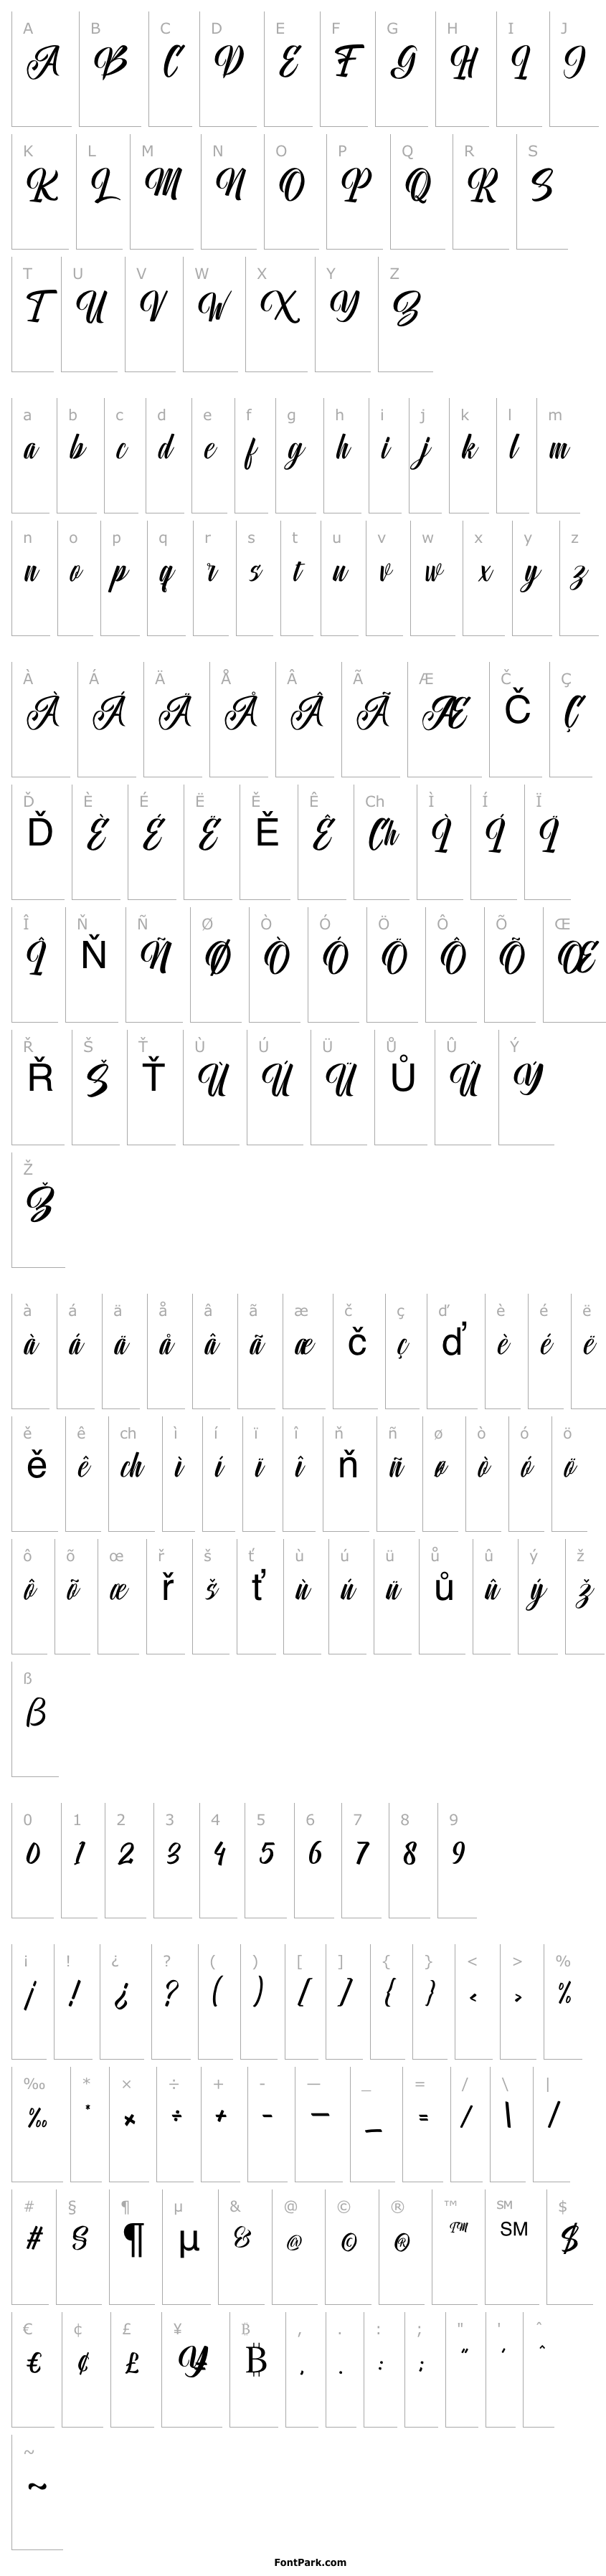 Overview Unimate Script